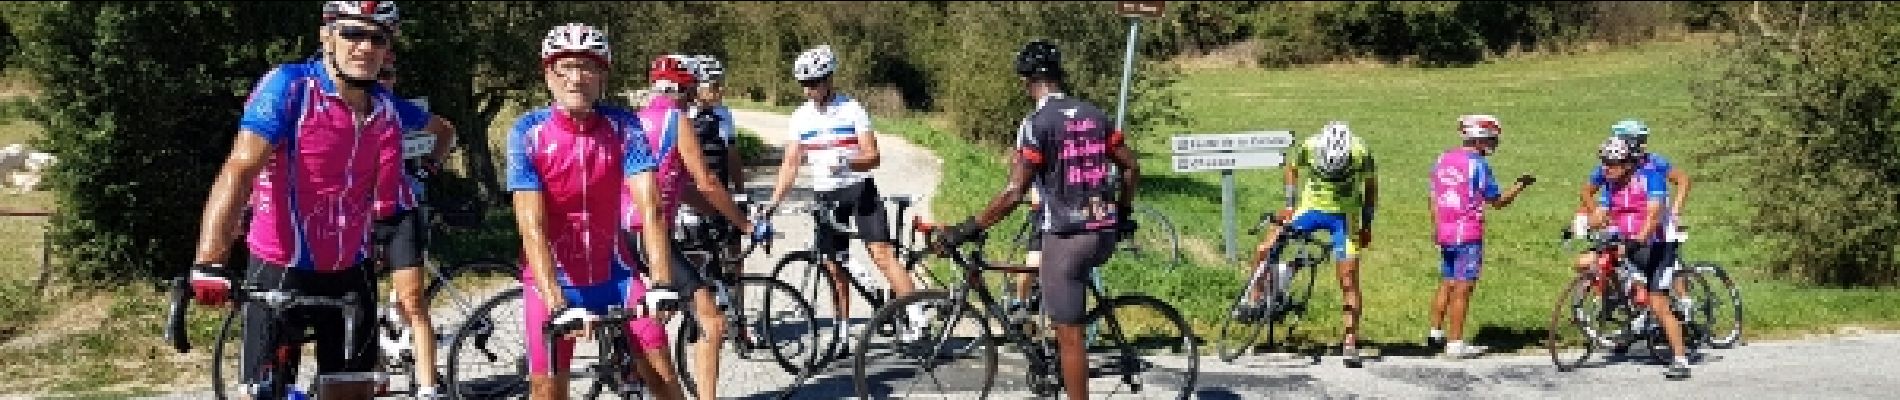 Excursión Bicicleta Guilherand-Granges - Sortie club rallye 23 08 2016 - Photo